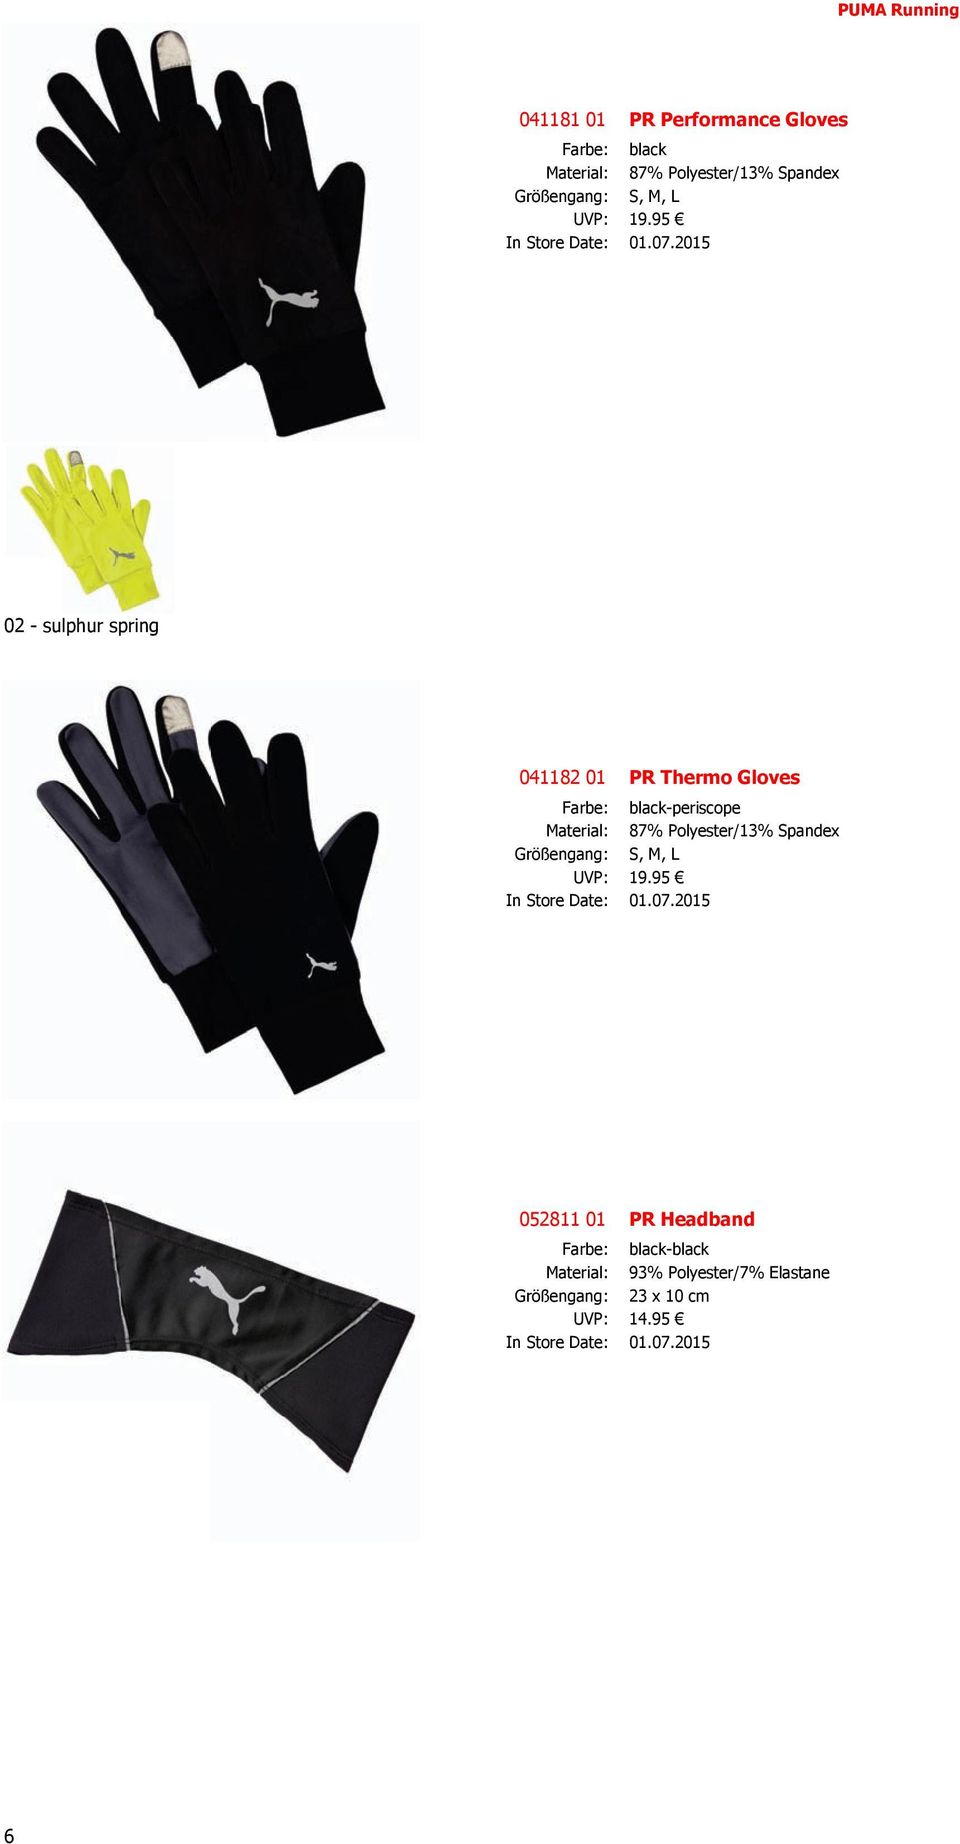 95 02 - sulphur spring 041182 01 PR Thermo Gloves -periscope Material: 87%